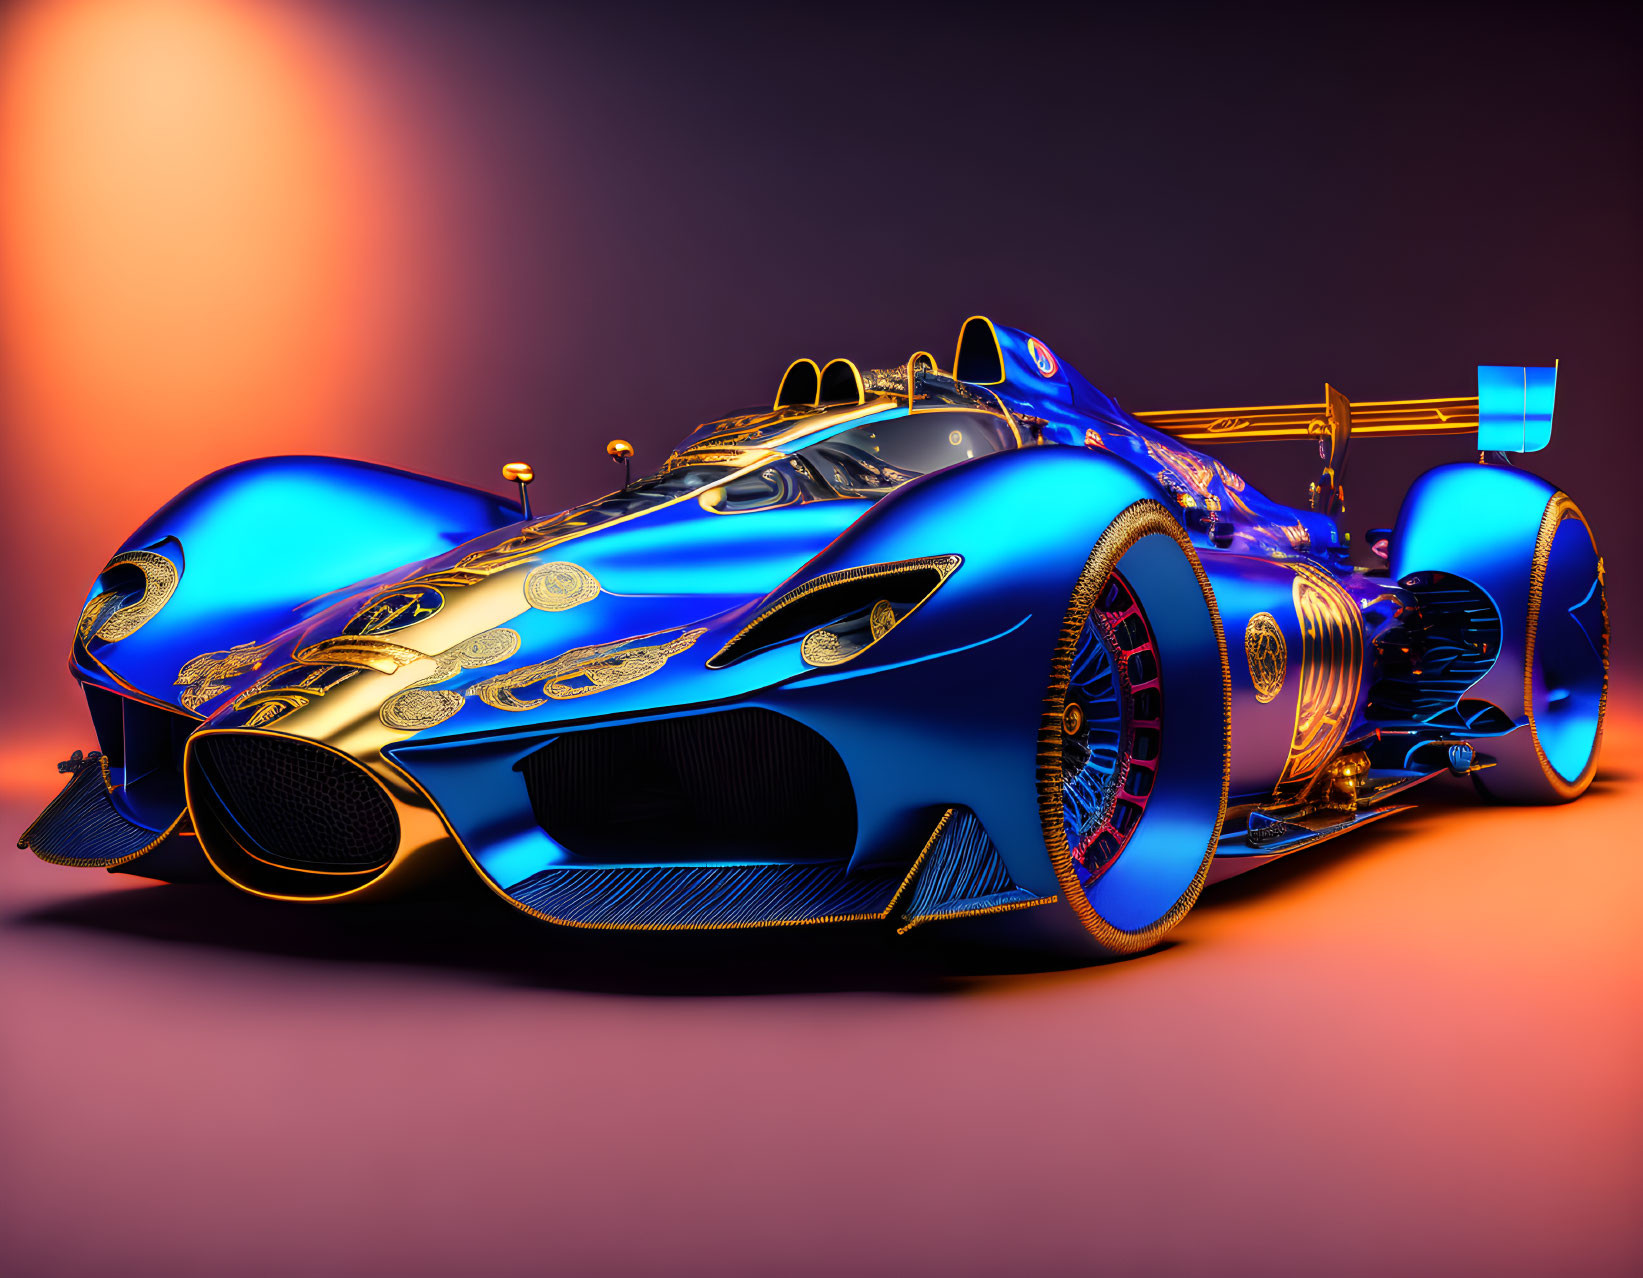 Futuristic blue and gold race car under orange and purple gradient lighting